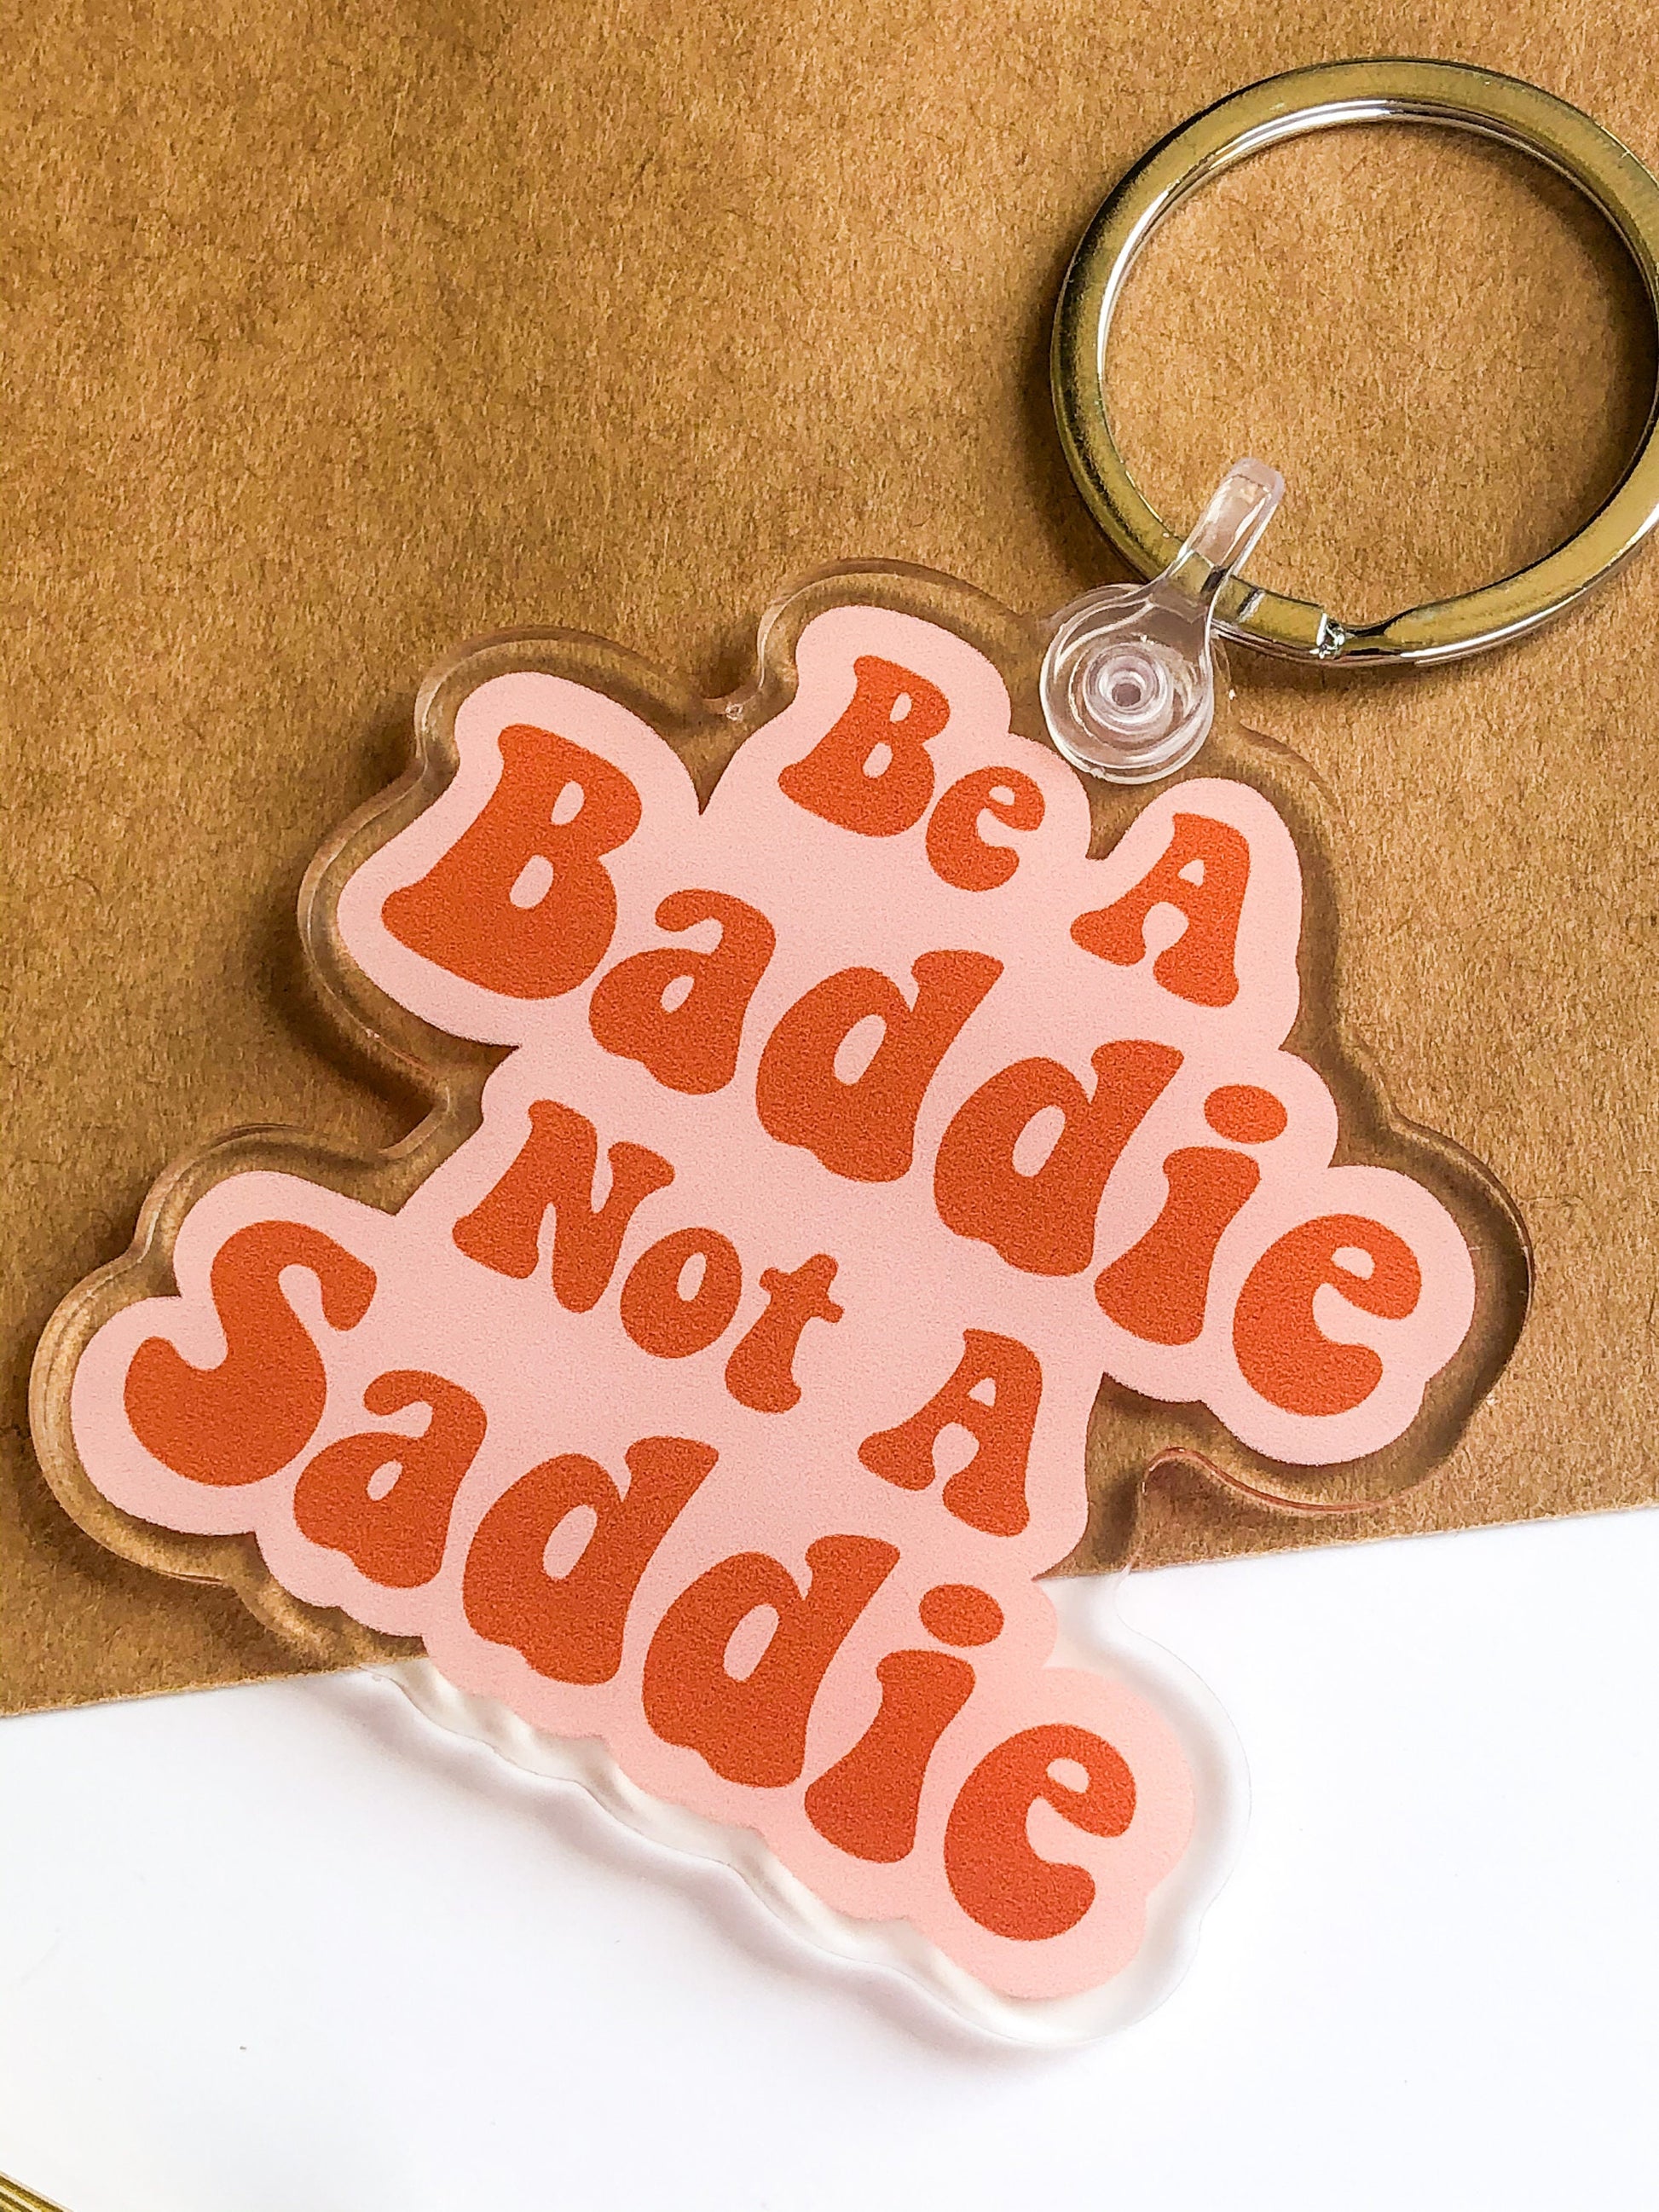 Baddie Not a Saddie Keychain, Funny Inspirational Keychain, Cute Keychain, Millennial Keychain, Backpack Charms, Cute Bag Charms, Keychains